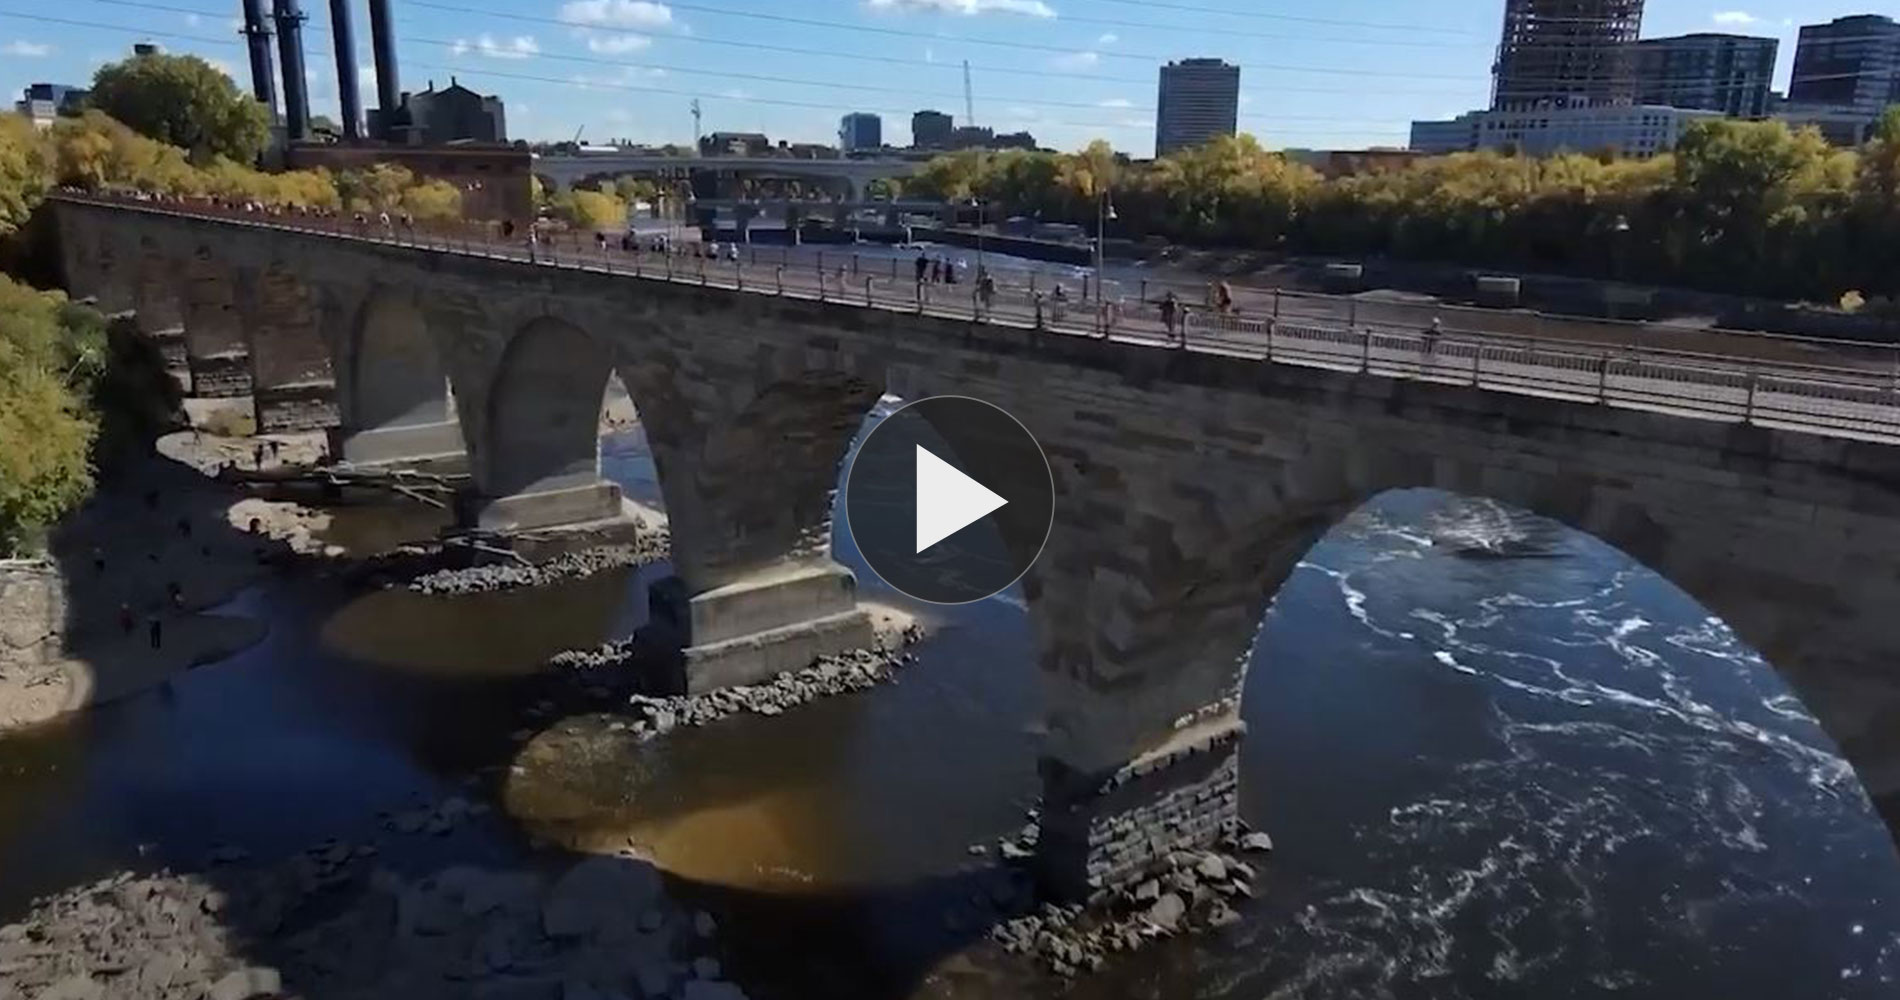 Minneapolis Stone Arch Bridge Rehabilitation